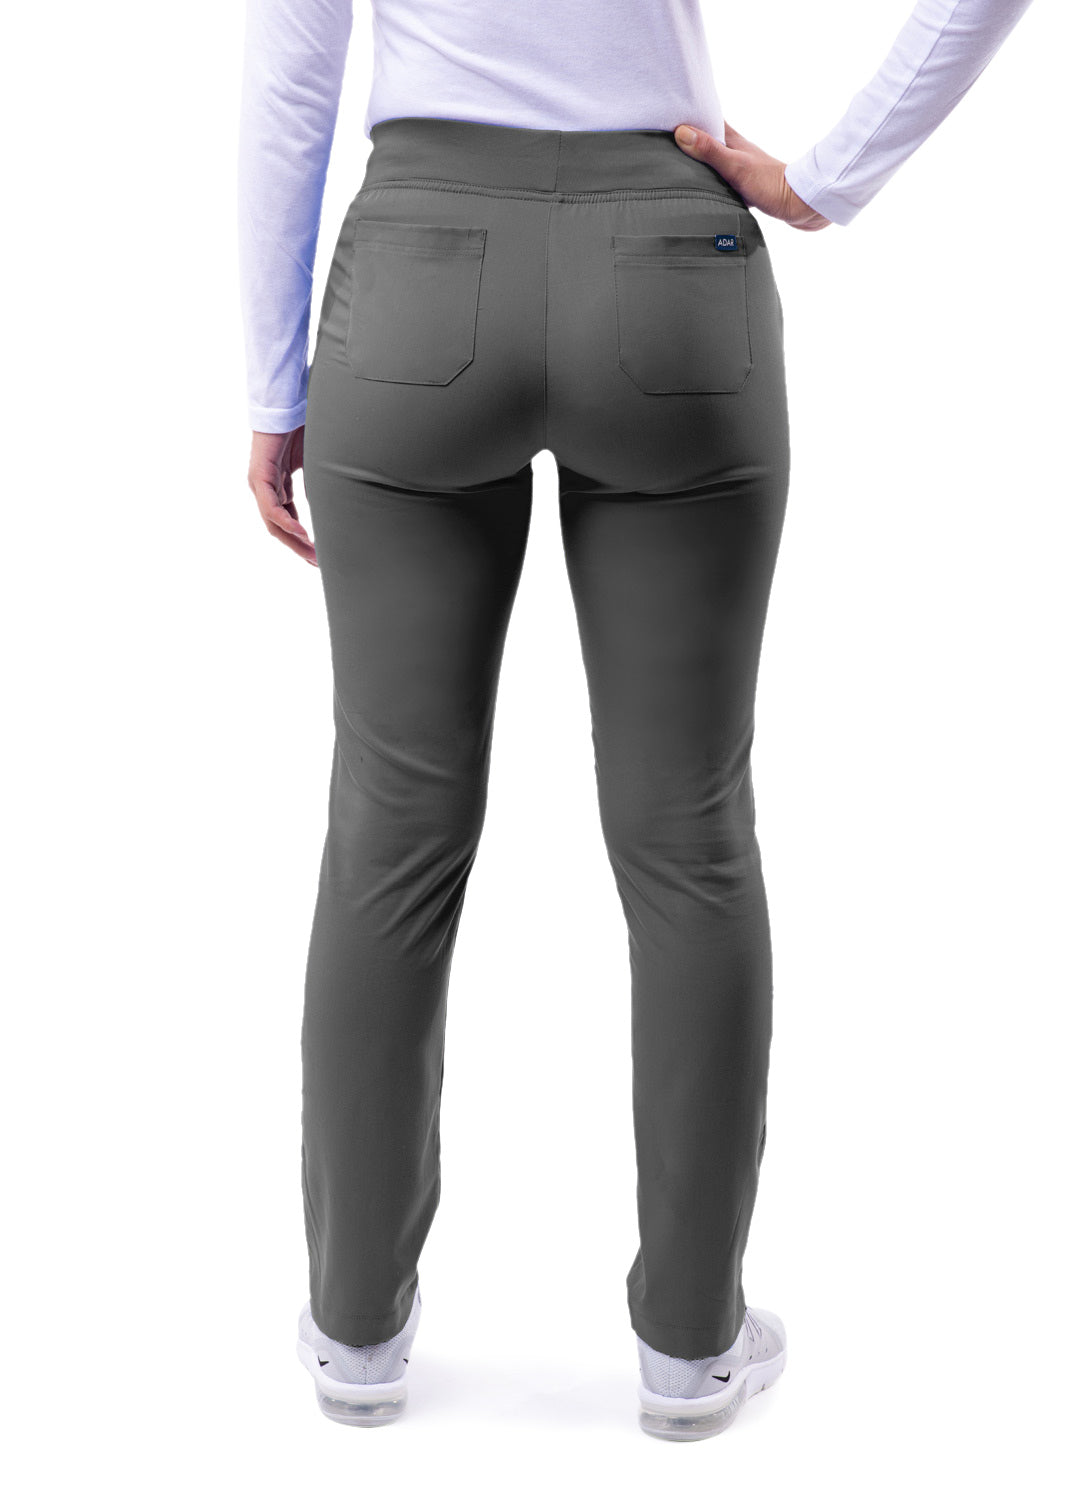 Olive Adar Women's Slim Fit 6 Pocket Pants Heather Collection